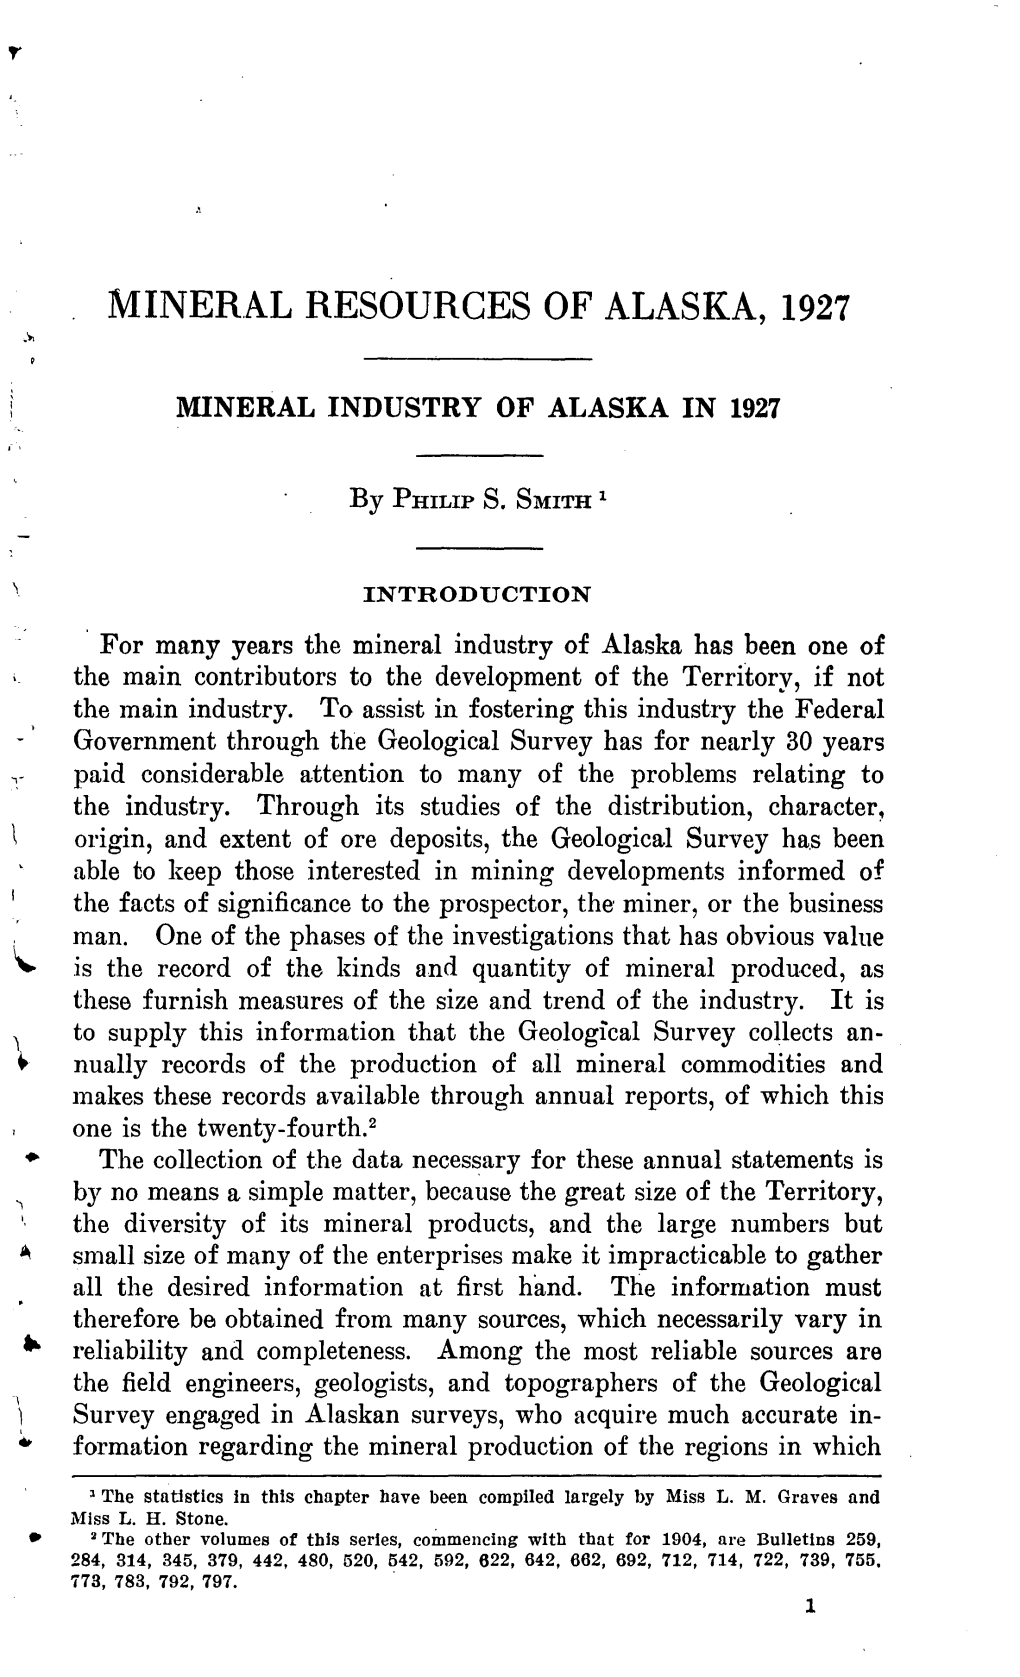 Mineral Resources of Alaska, 1927